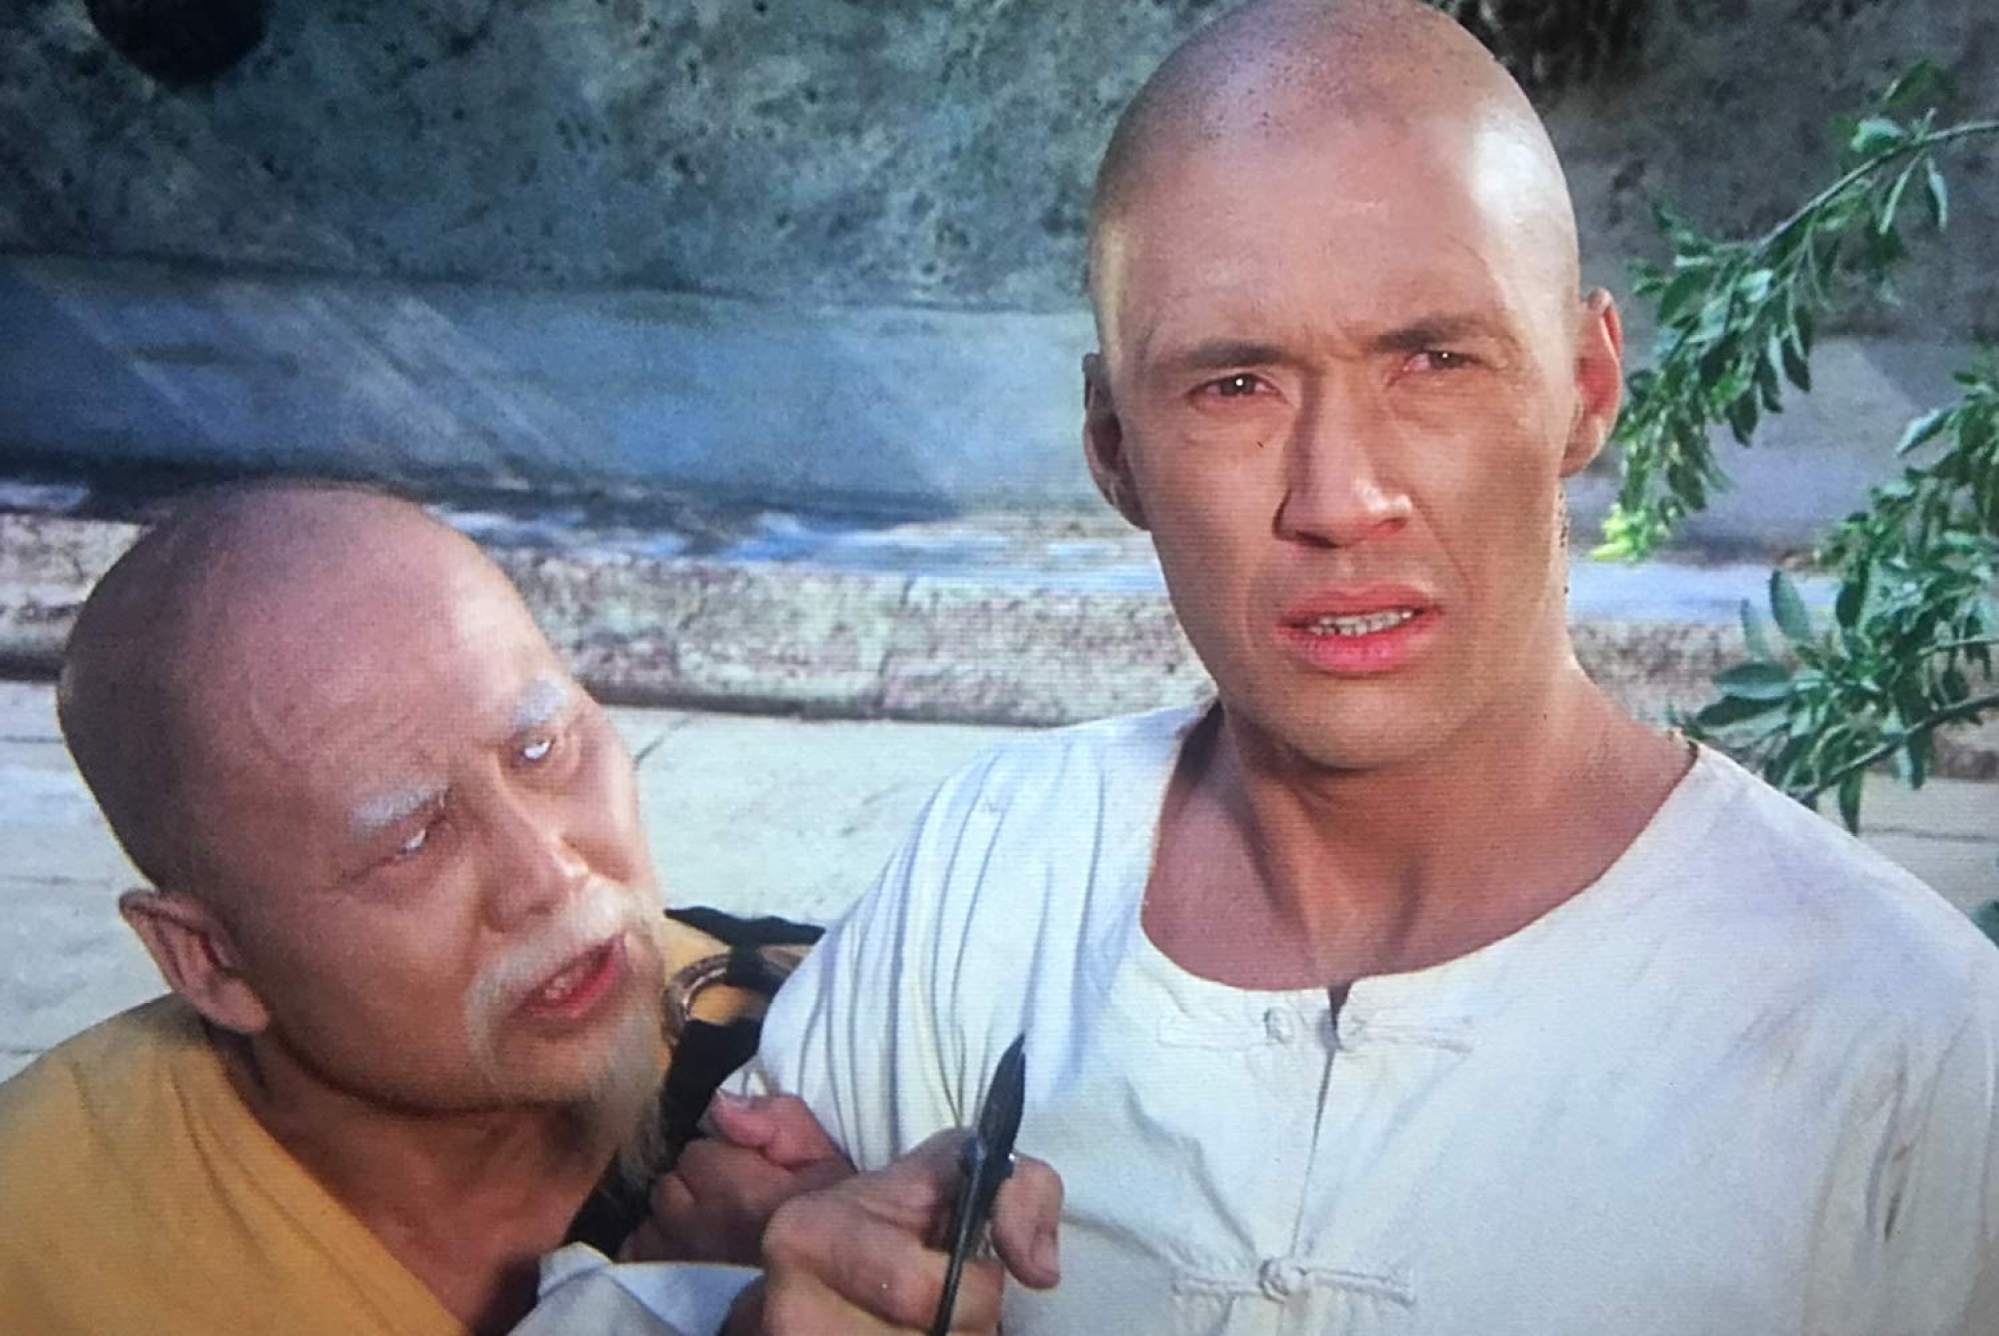 David Carradine (right) with his sifu in Warner Bros. film Kung Fu. Photo: Handout